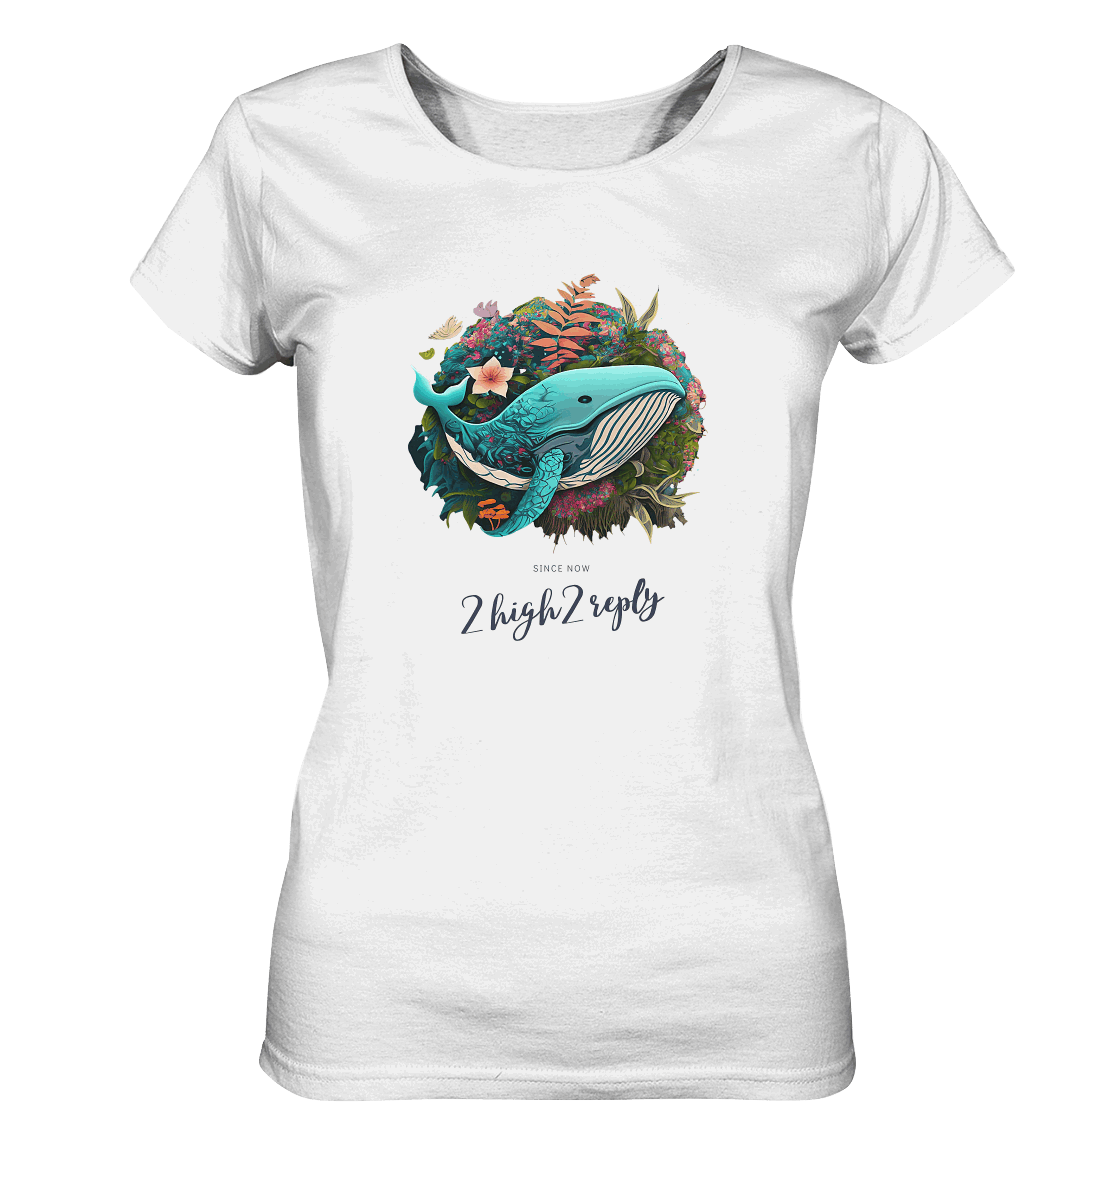 2high2reply / whale of wonder - Ladies Organic Shirt